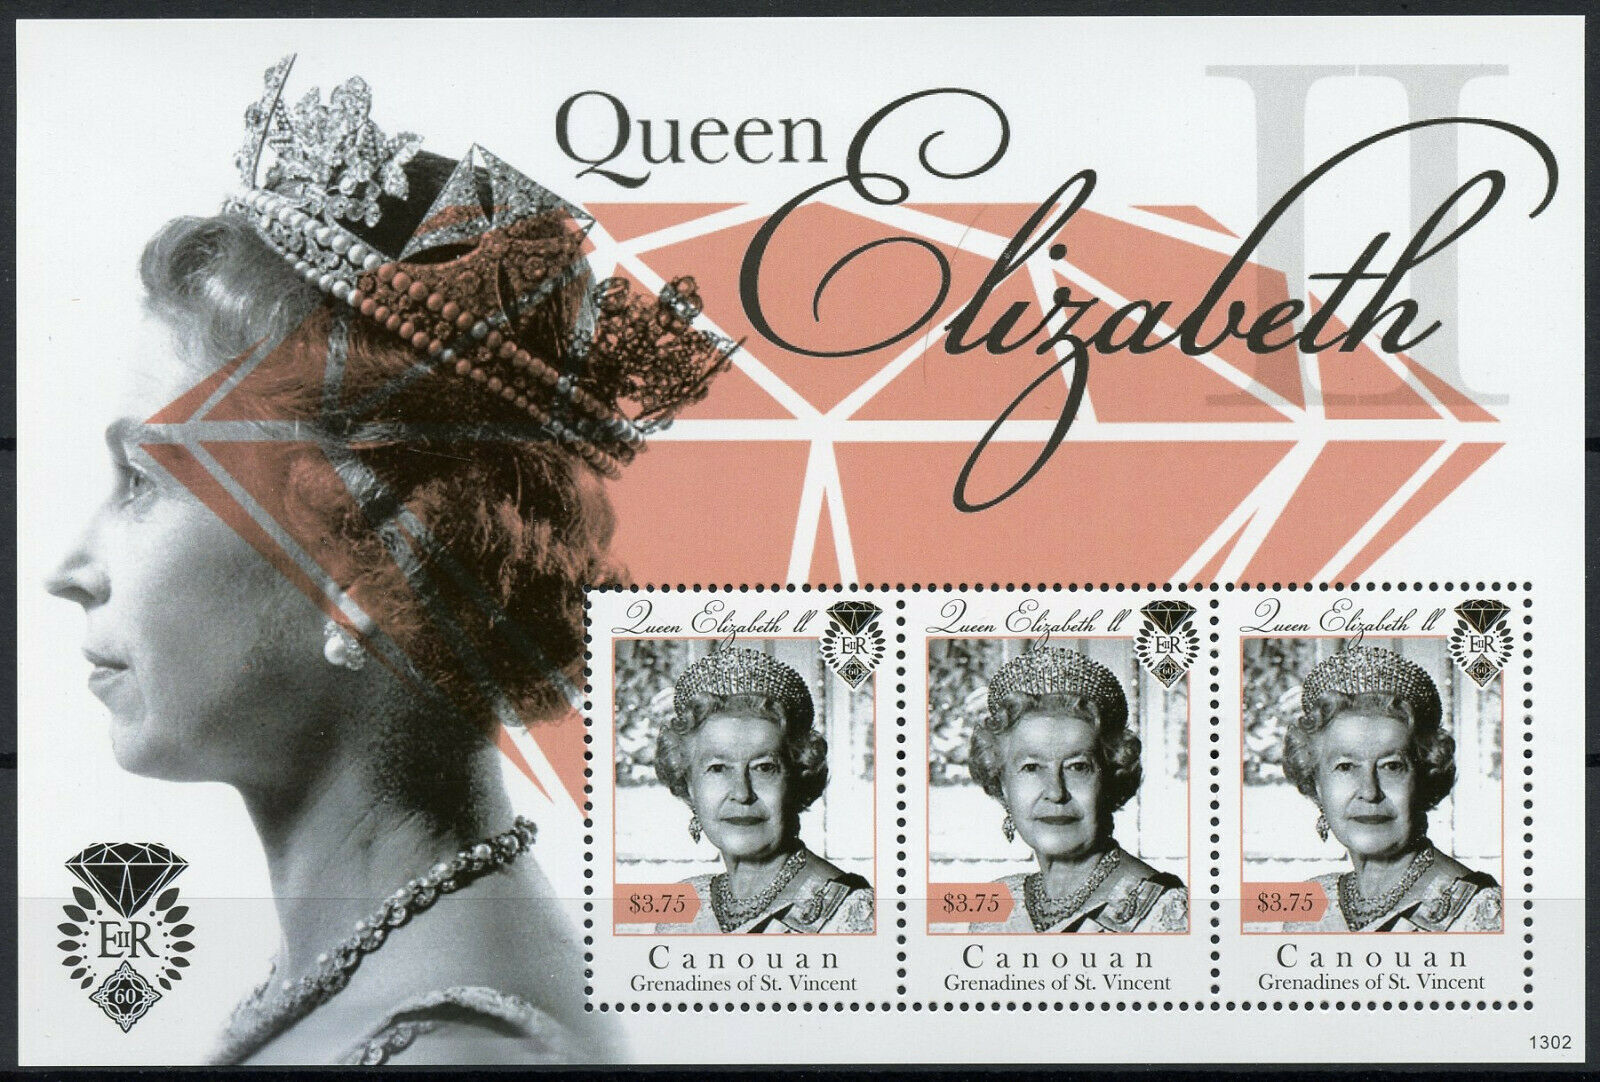 Canouan Gren St Vincent Stamps 2013 MNH Royalty Stamps Queen Elizabeth II Diamond Jubilee 3v MS